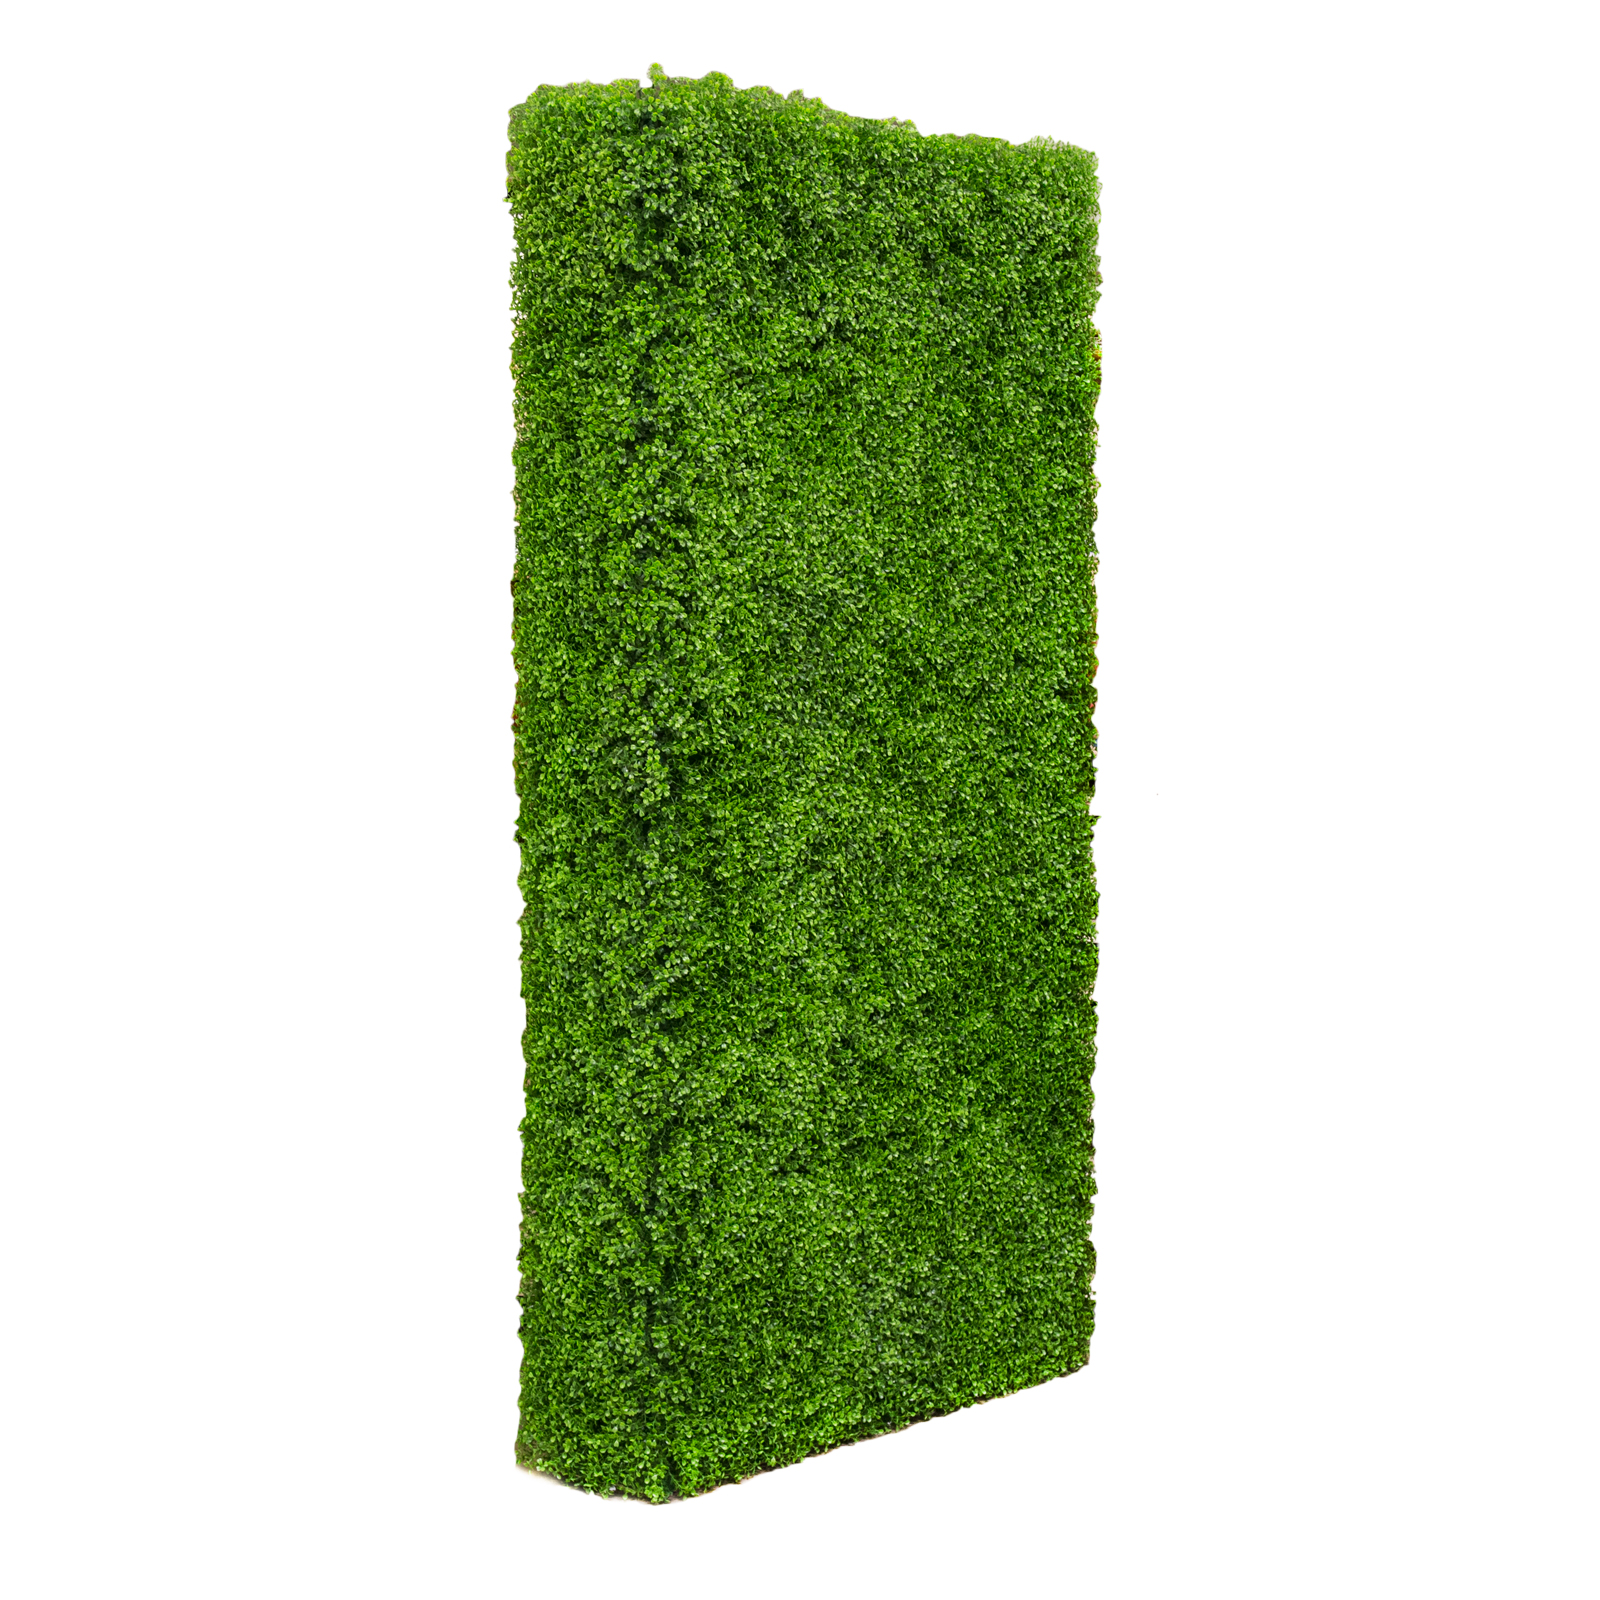 Thảm cỏ nhựa 4 lá treo tường